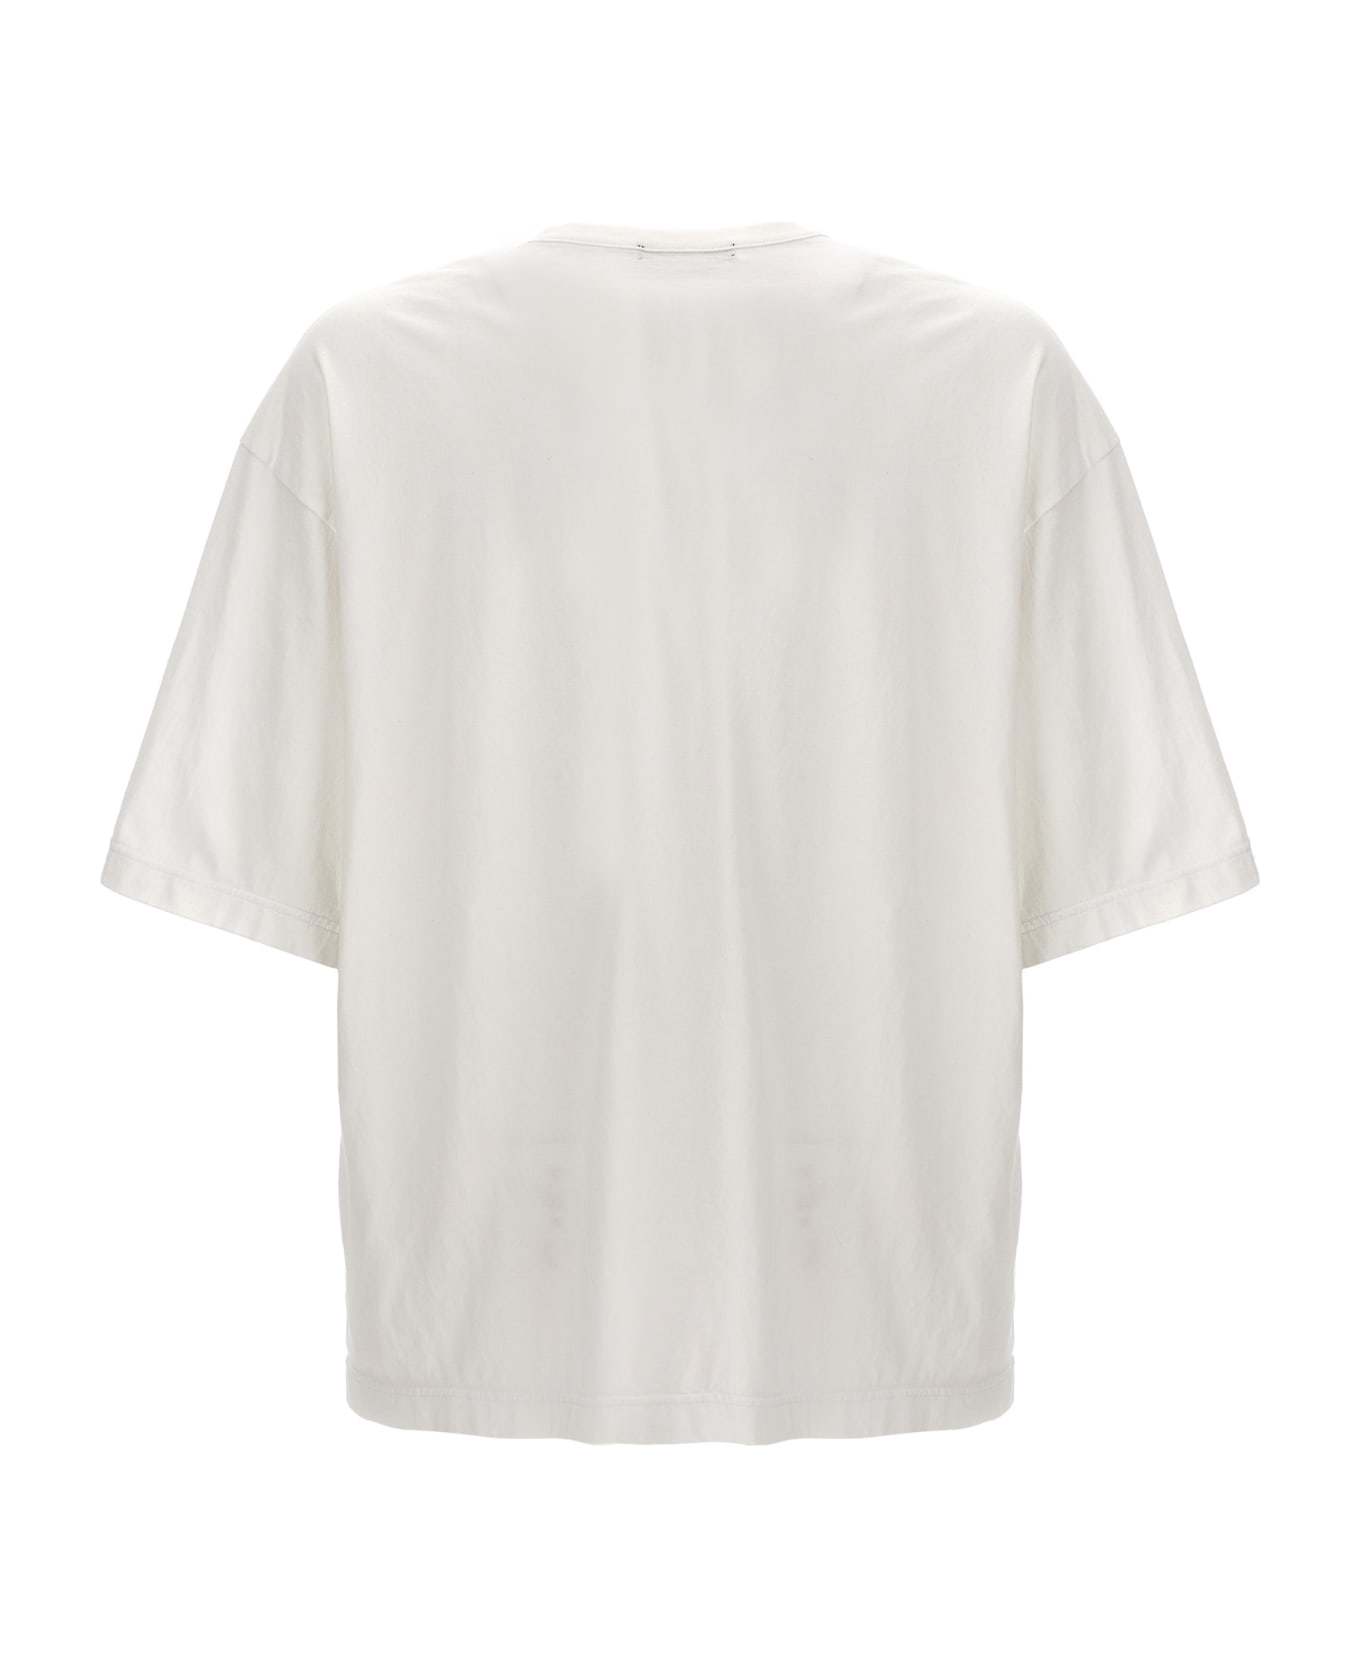 Undercover Jun Takahashi 'chaos And Balance' T-shirt - White シャツ